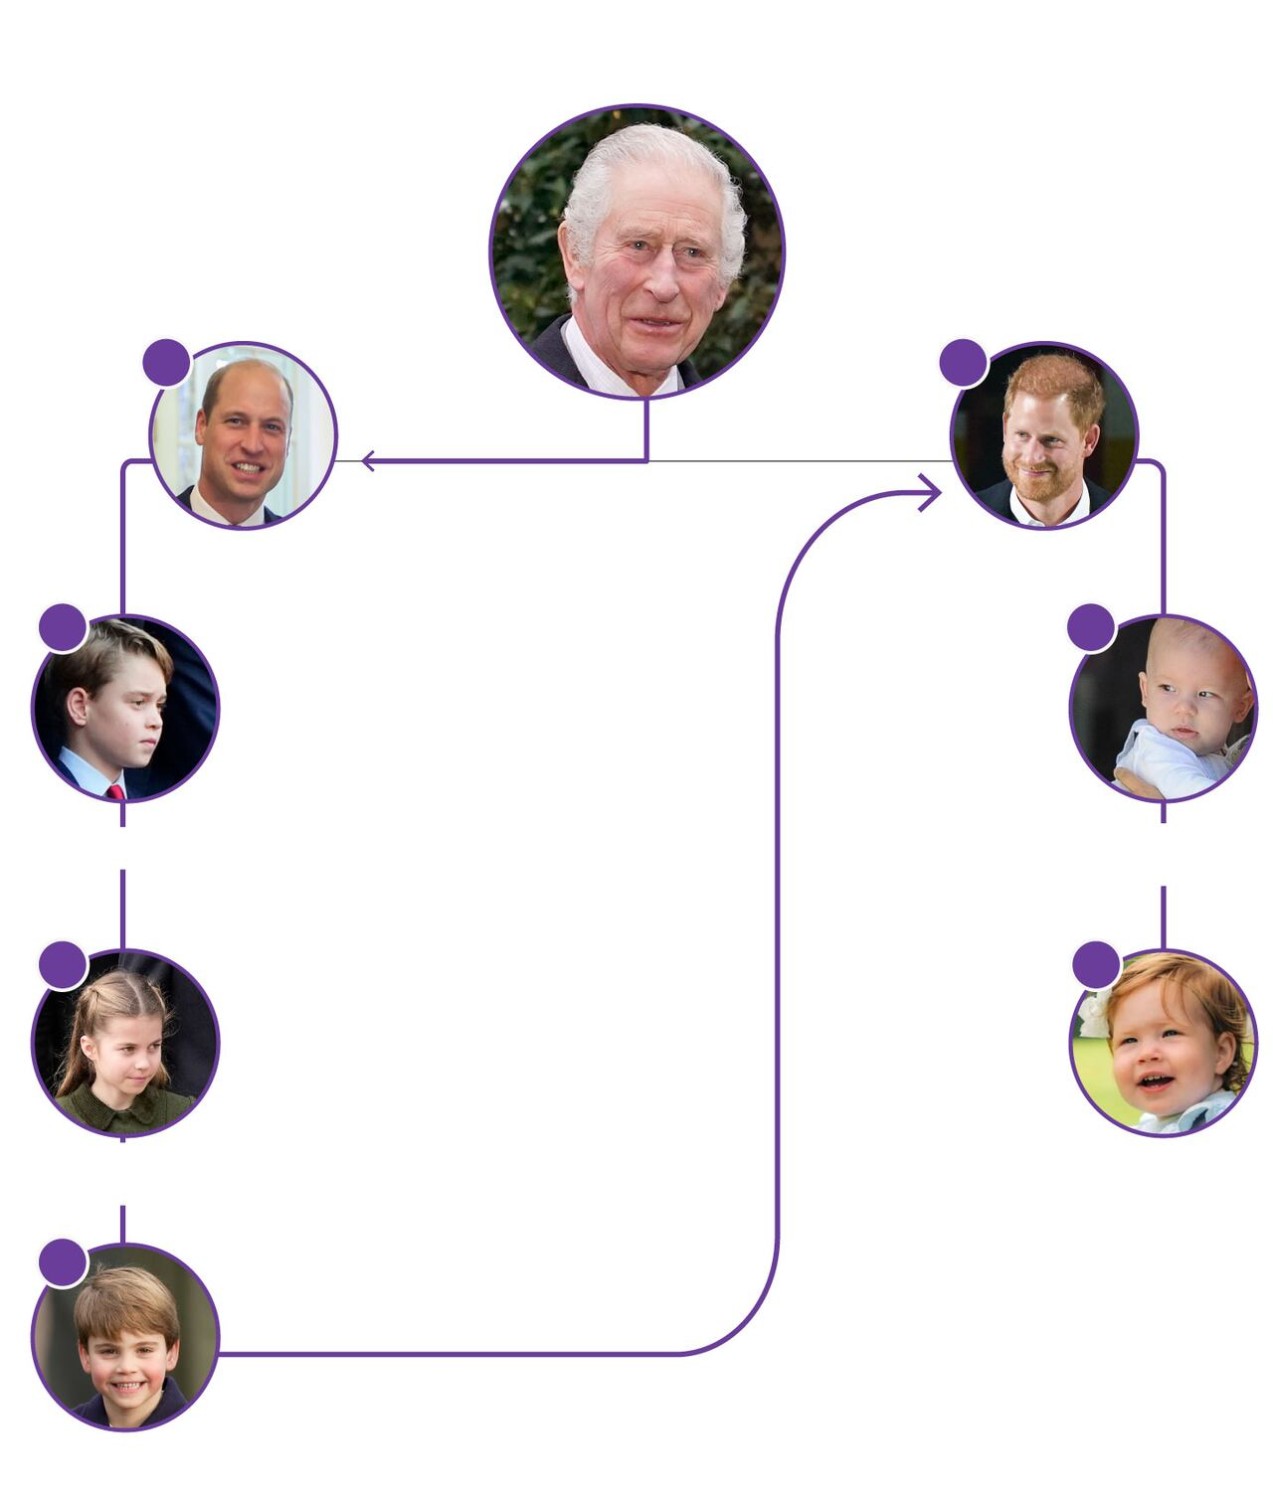 Source: British Royal Family (CBC)